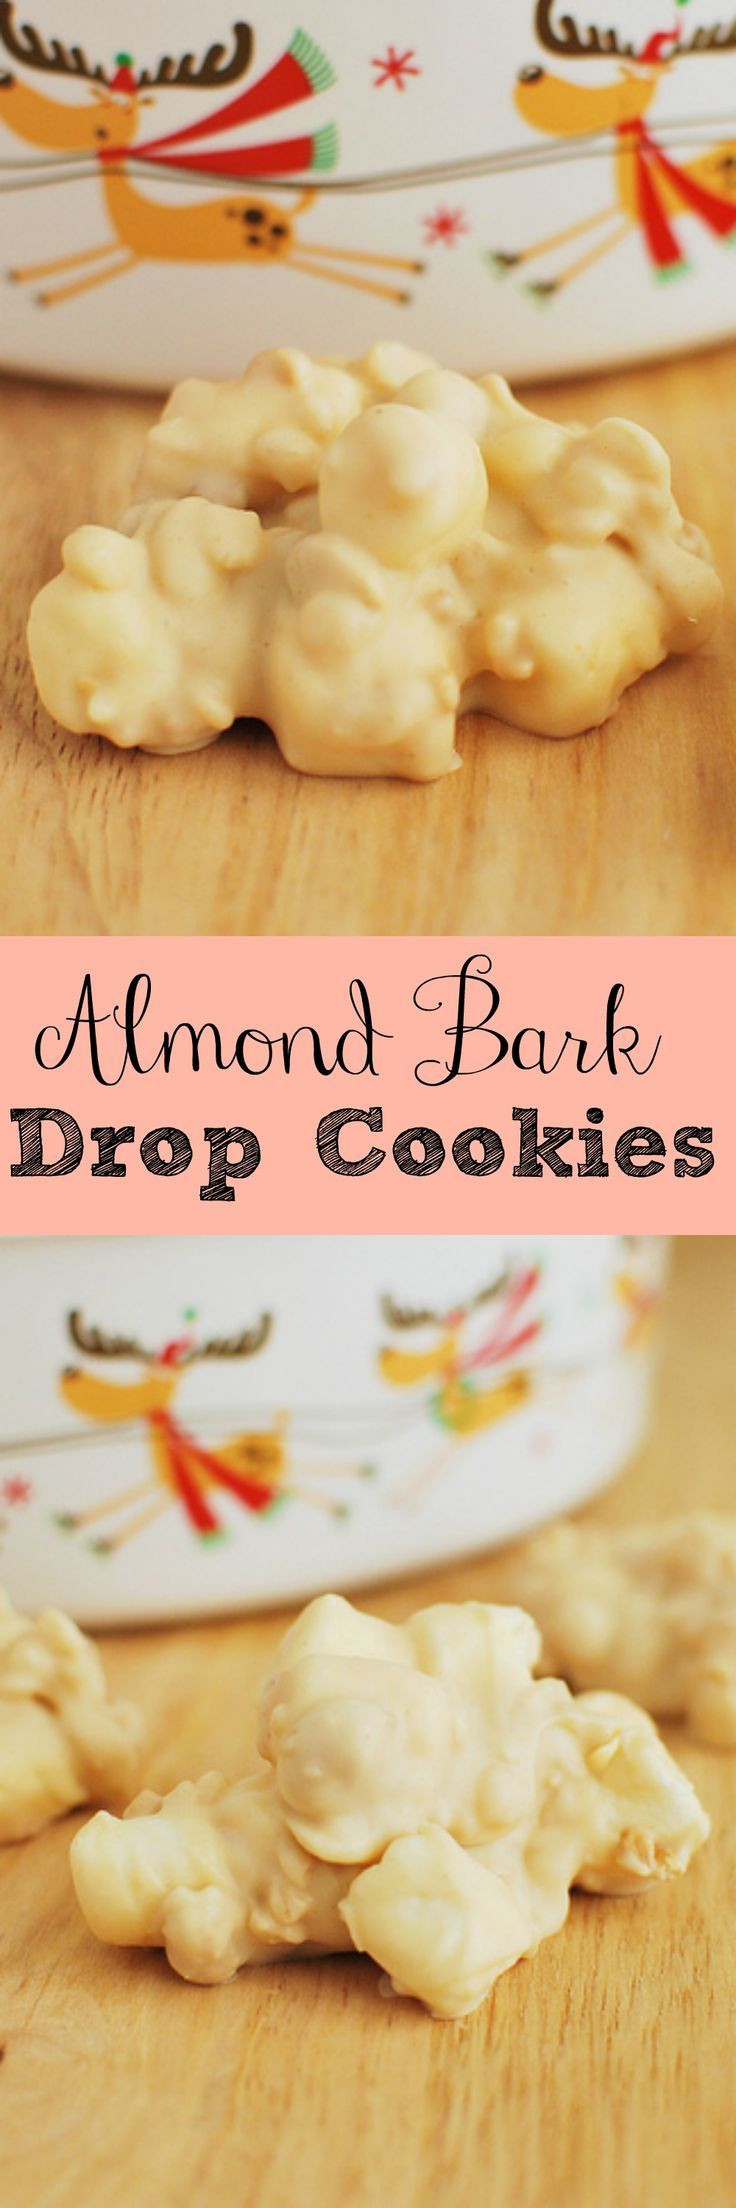 Christmas Drop Cookies
 25 best ideas about Drop cookies on Pinterest